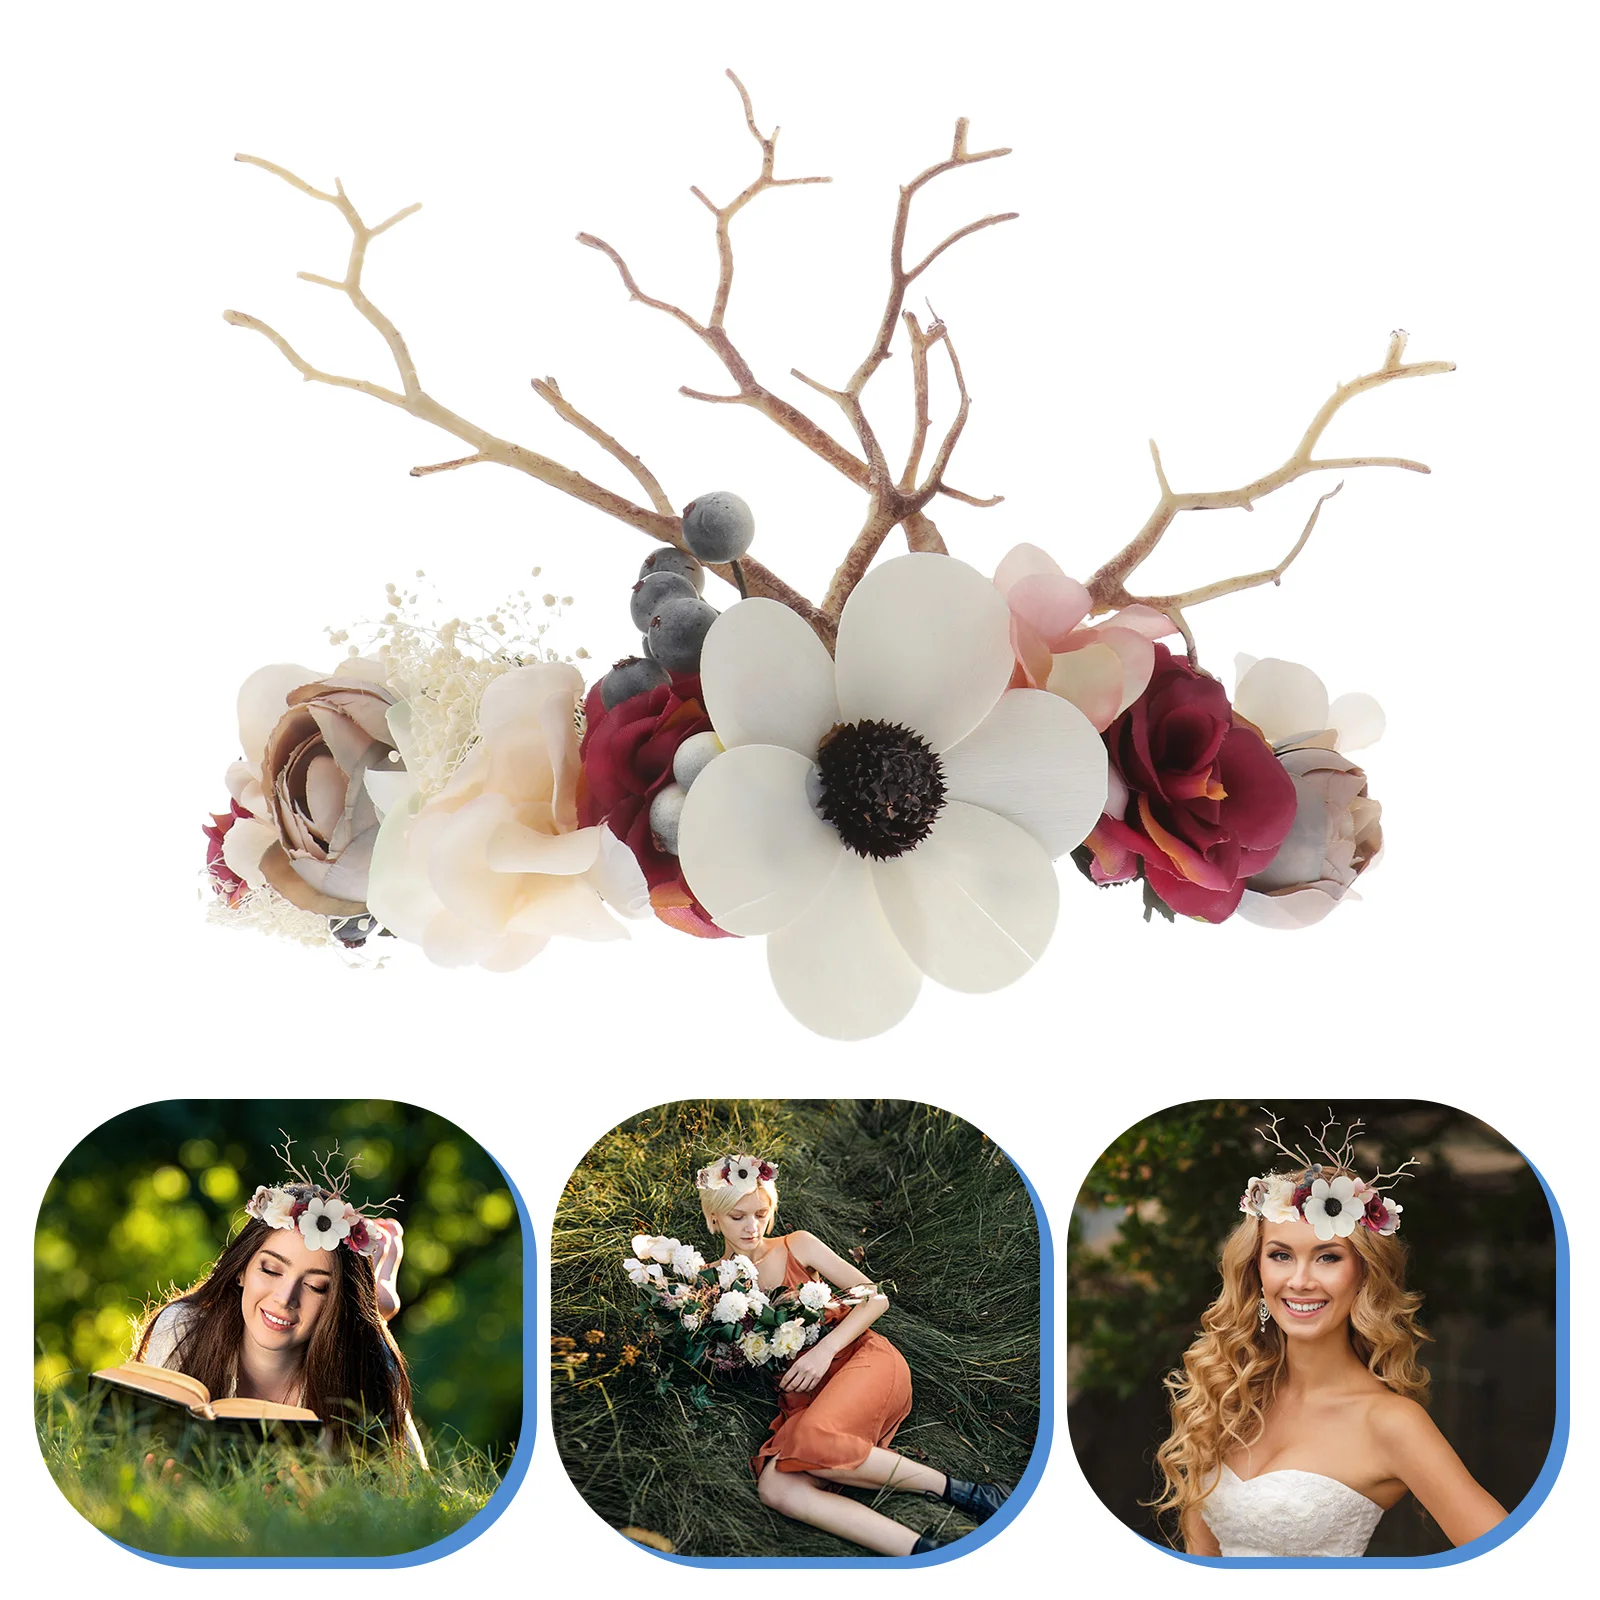 

Christmas Reindeer Antlers Headband with Flowers Deer Hair Branch Flower Crown Headband for Party Costume